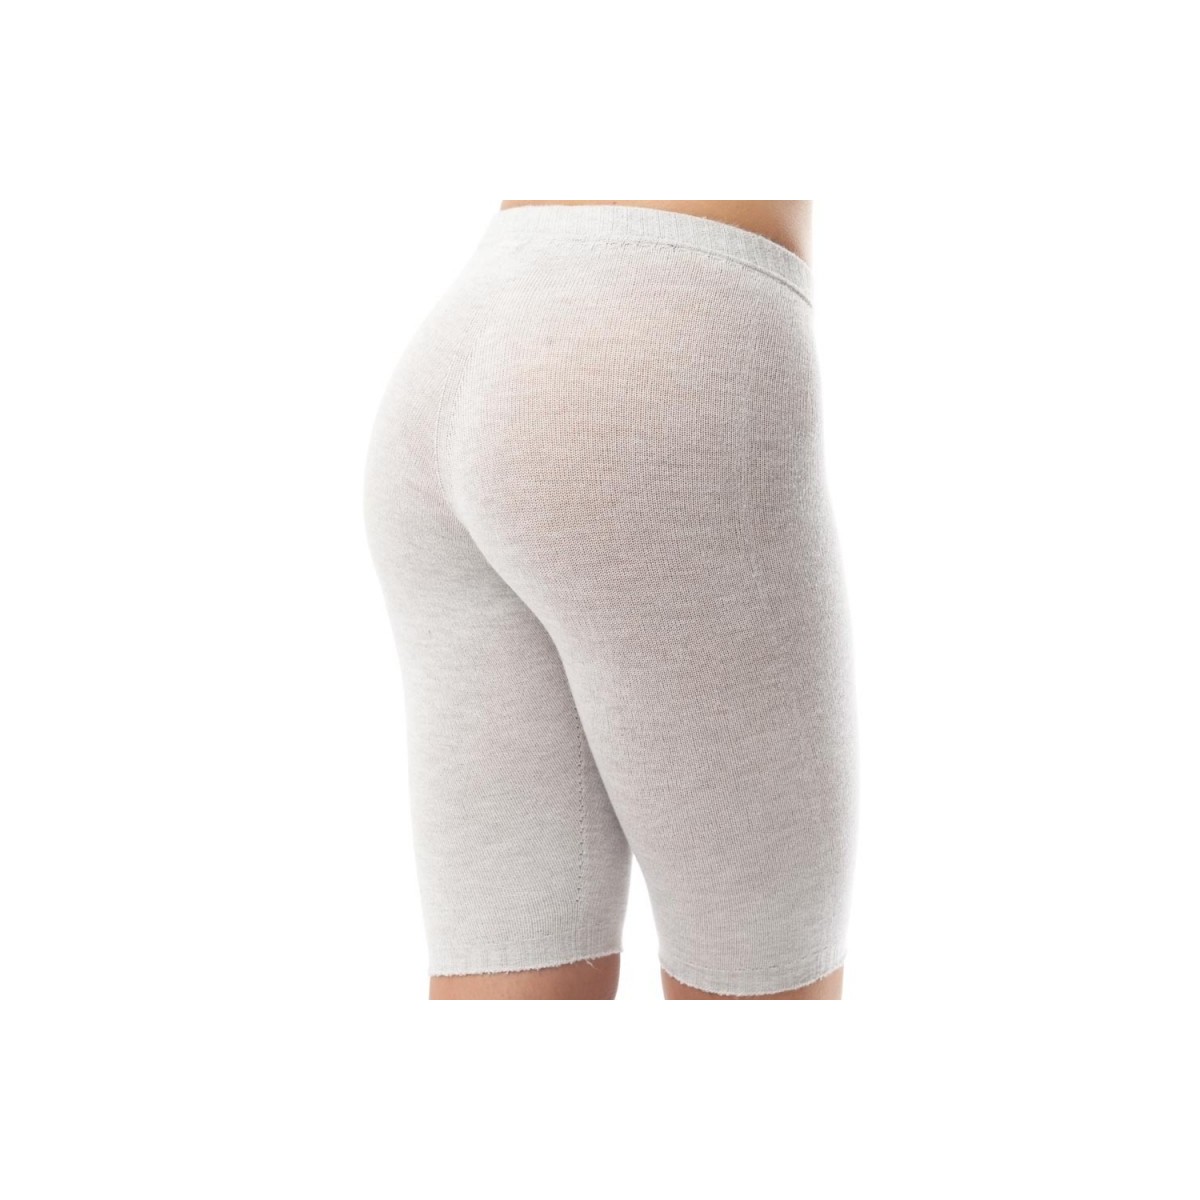 https://3pstock.com/45261-square_large_default/SilverSkin-WARM-SK019W-unisex-Thermal-underwear-Knee-length-leggings-Silver-fiber-MADE-IN-ITALY.jpg